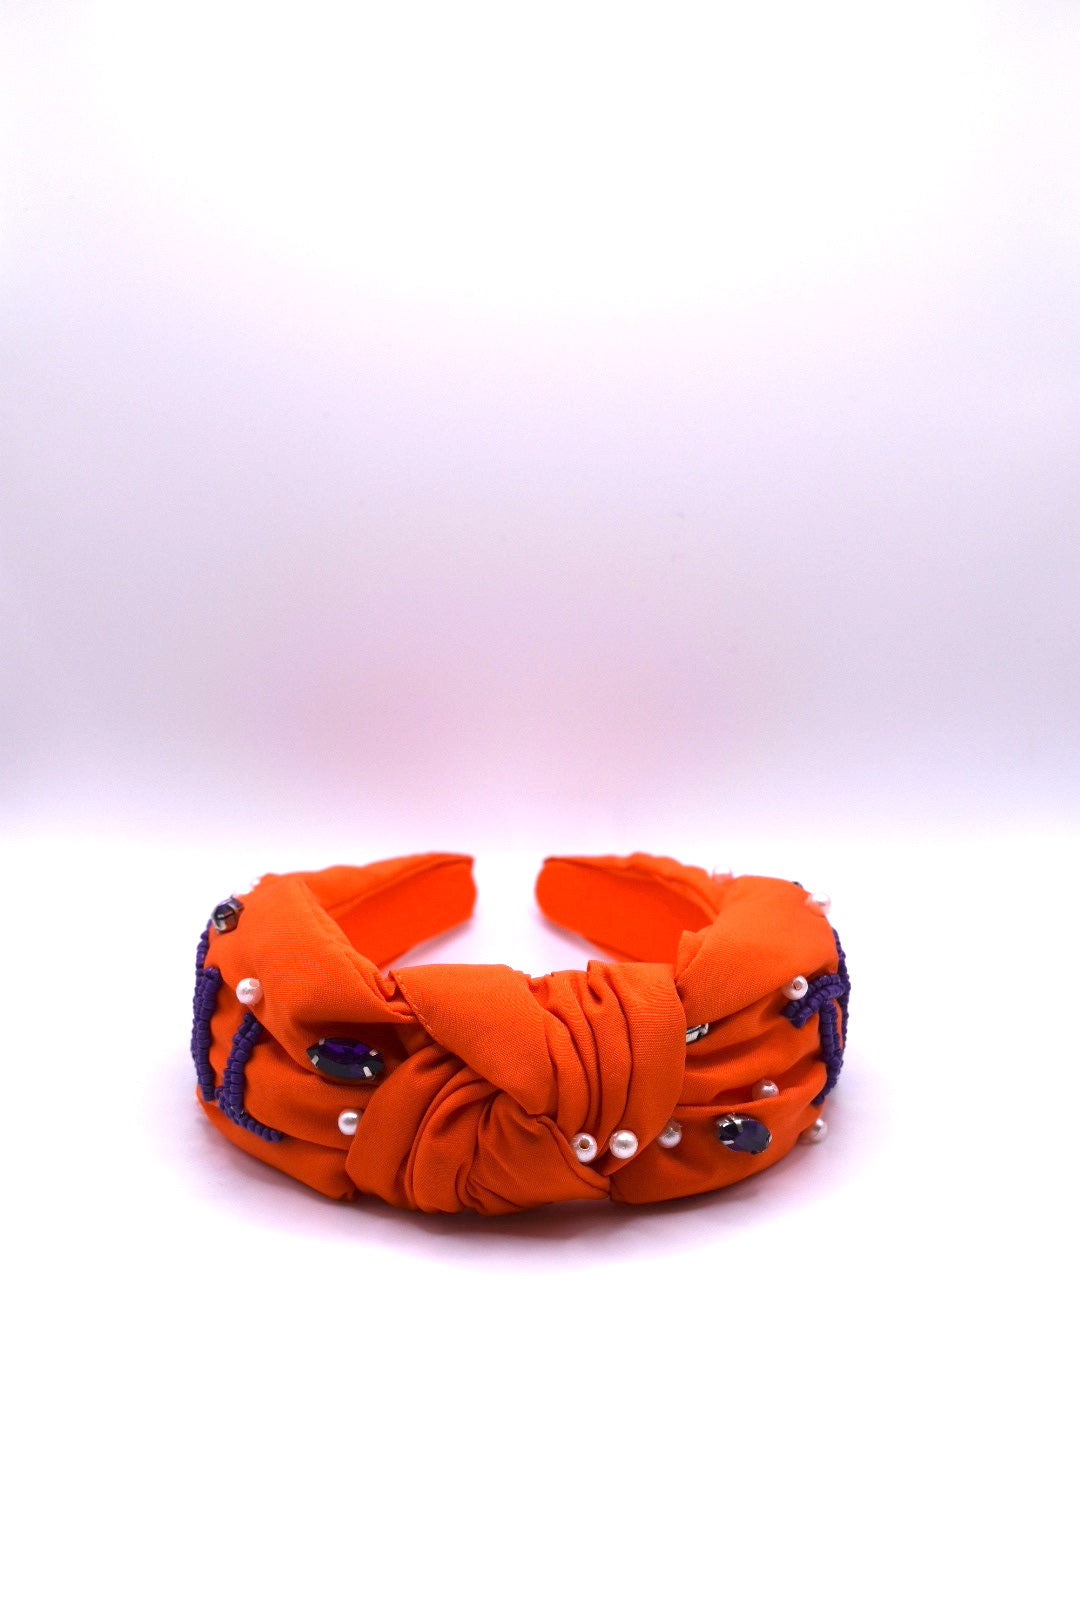 Clemson Gameday Beaded Headband Orange & Purple